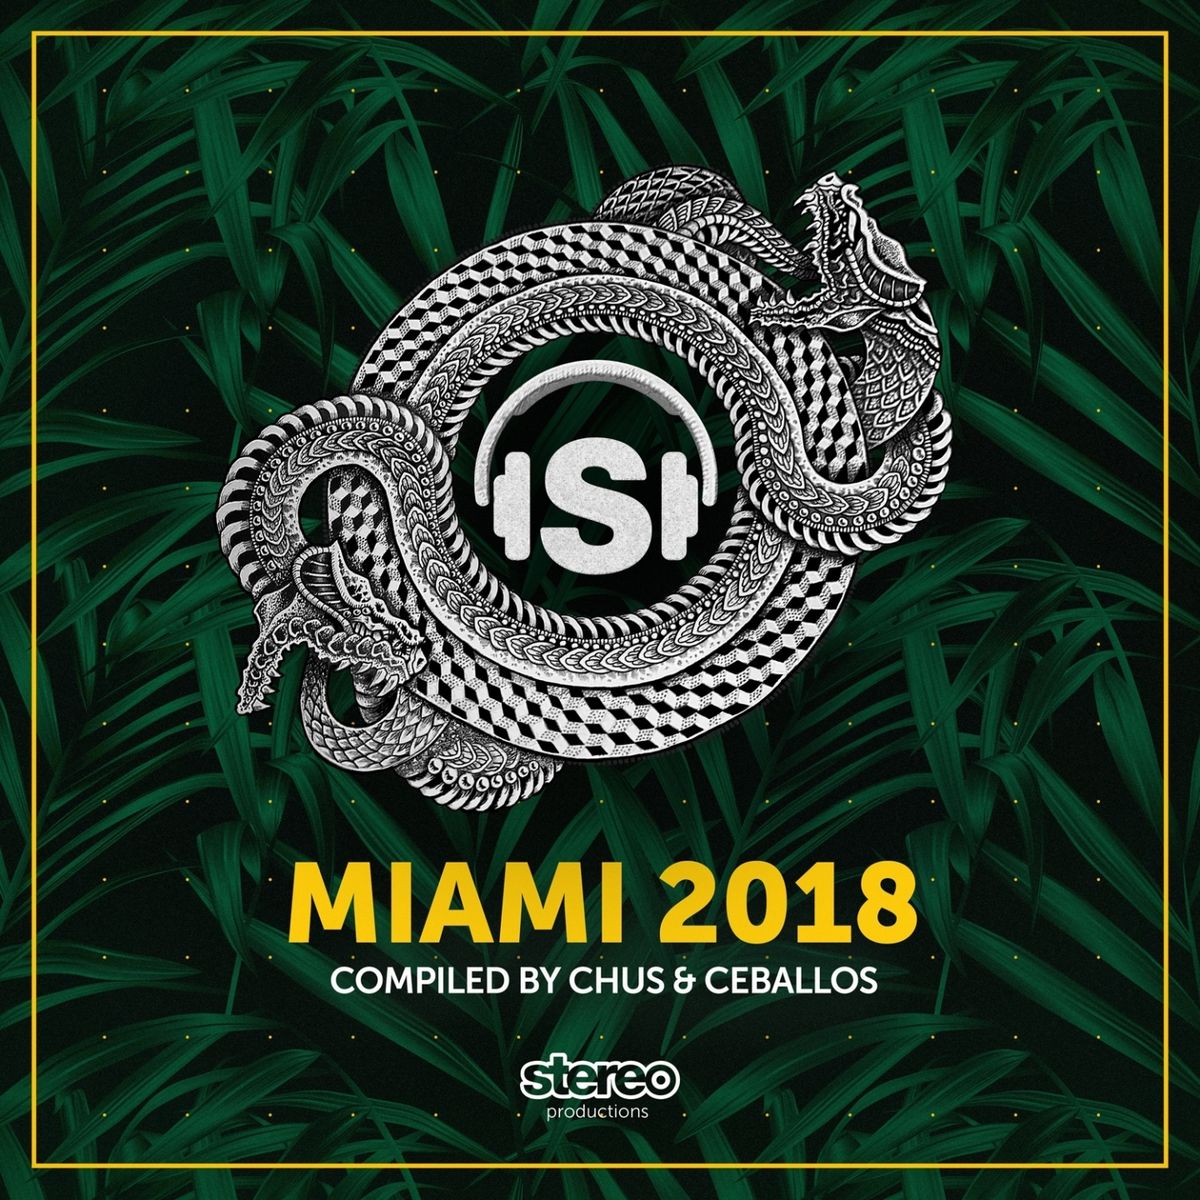 Chus & Ceballos - Miami 2018 / Stereo Productions